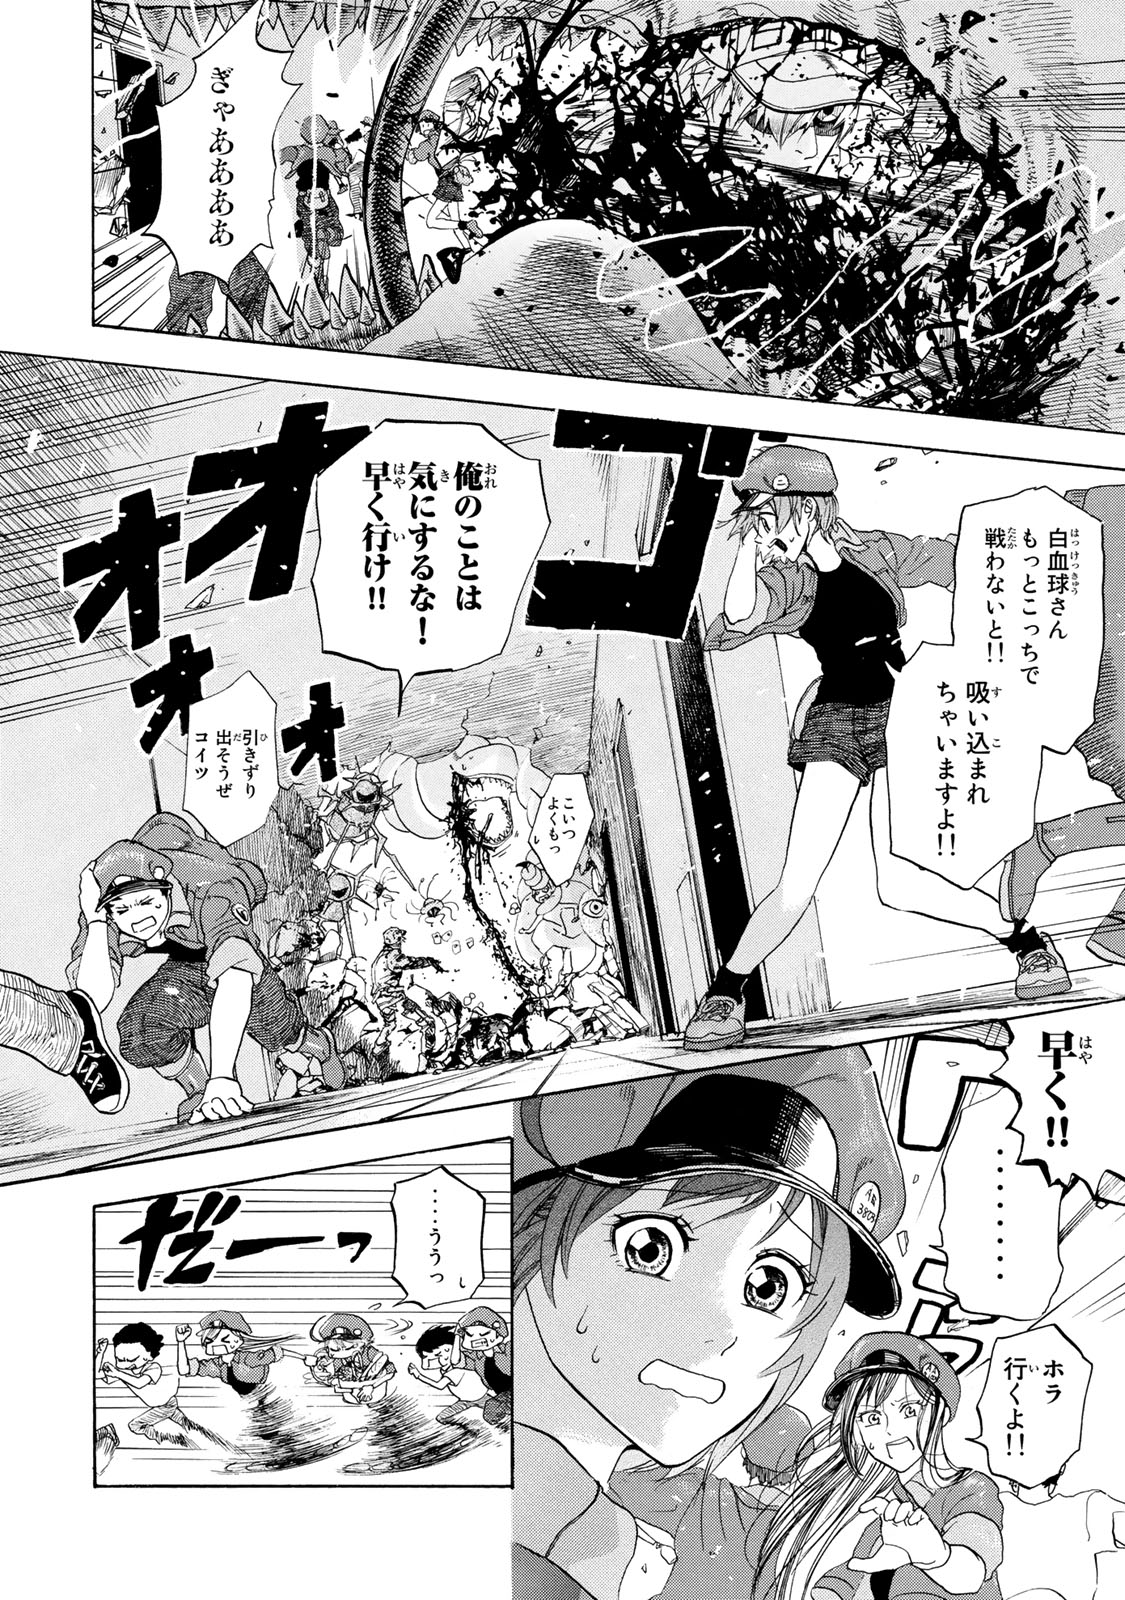 Hataraku Saibou - Chapter 4 - Page 12